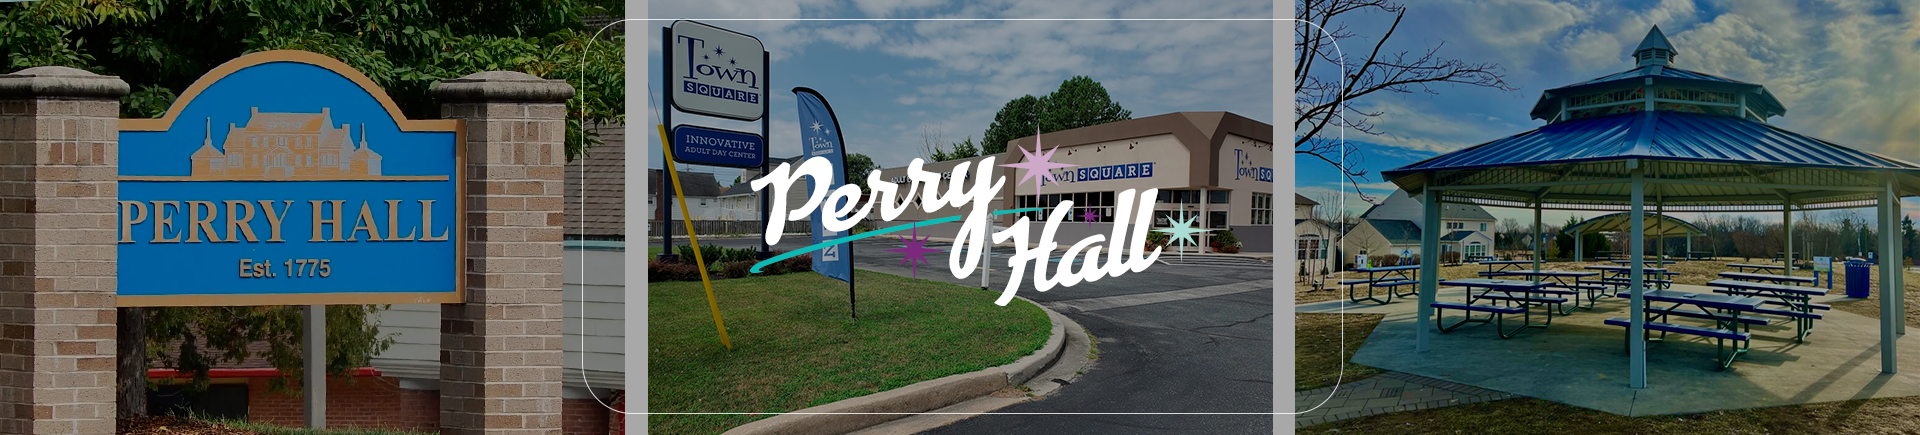 Perry Hall Blog